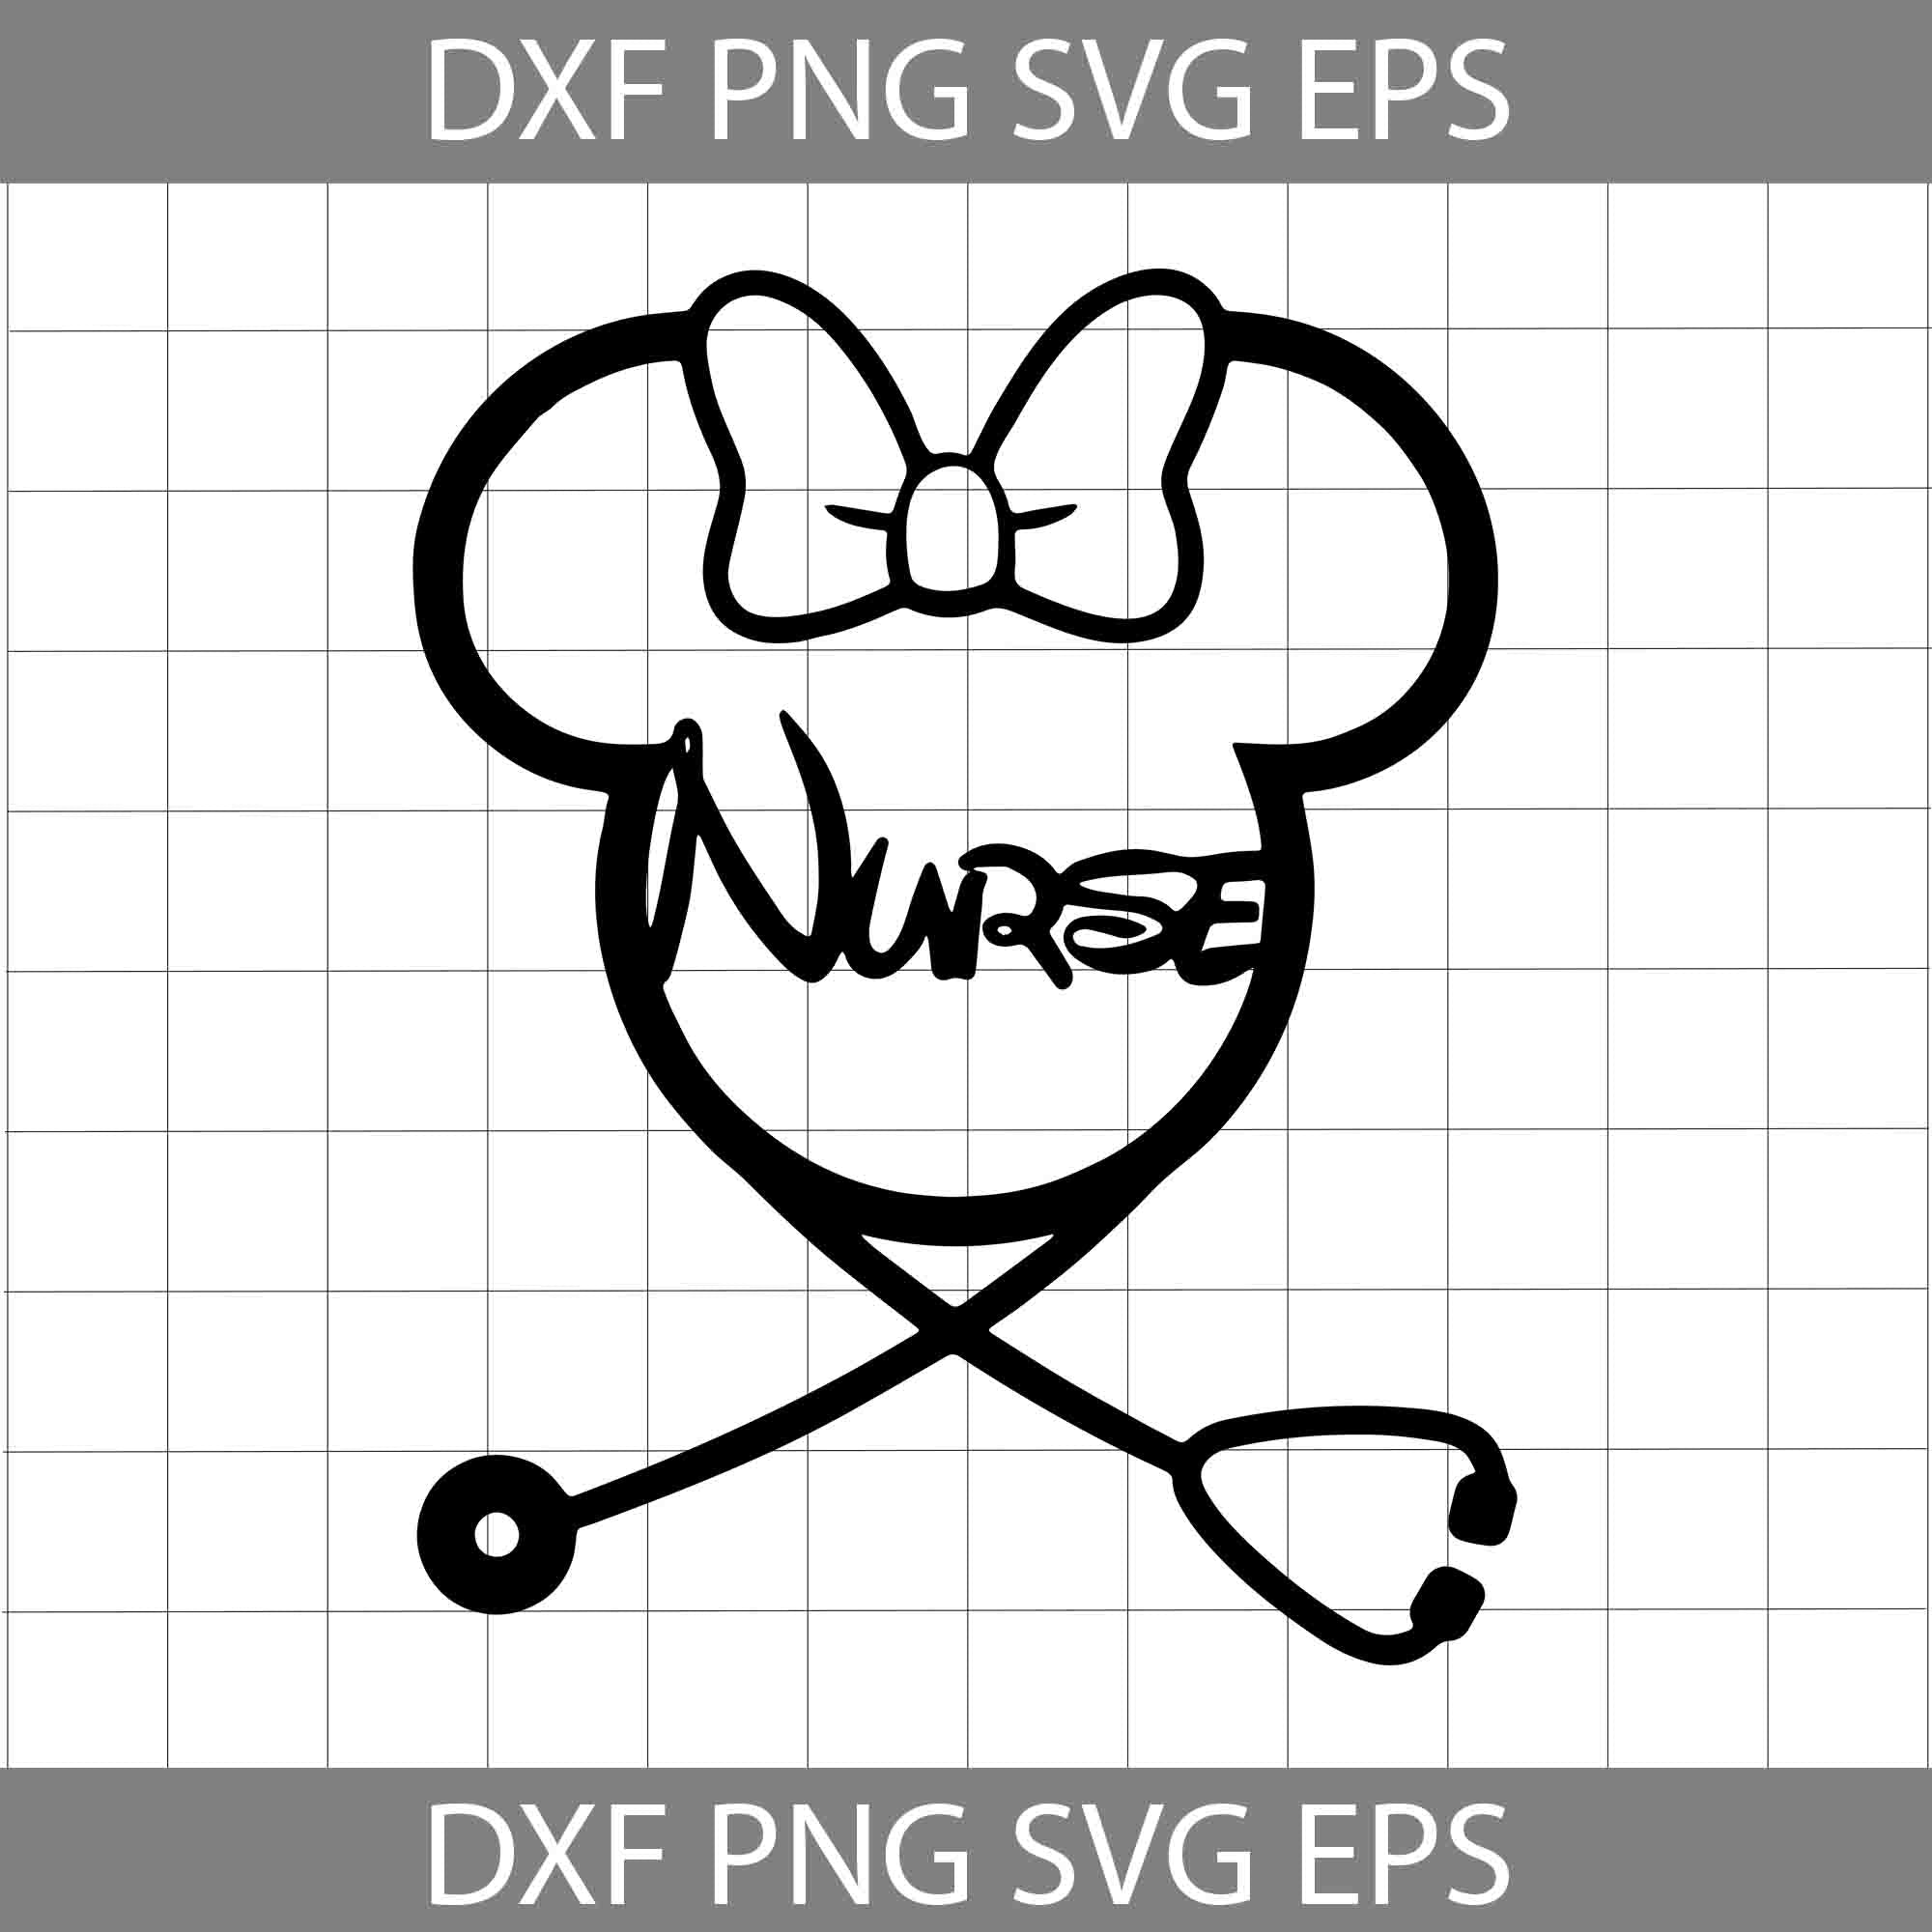 nurse silhouette png